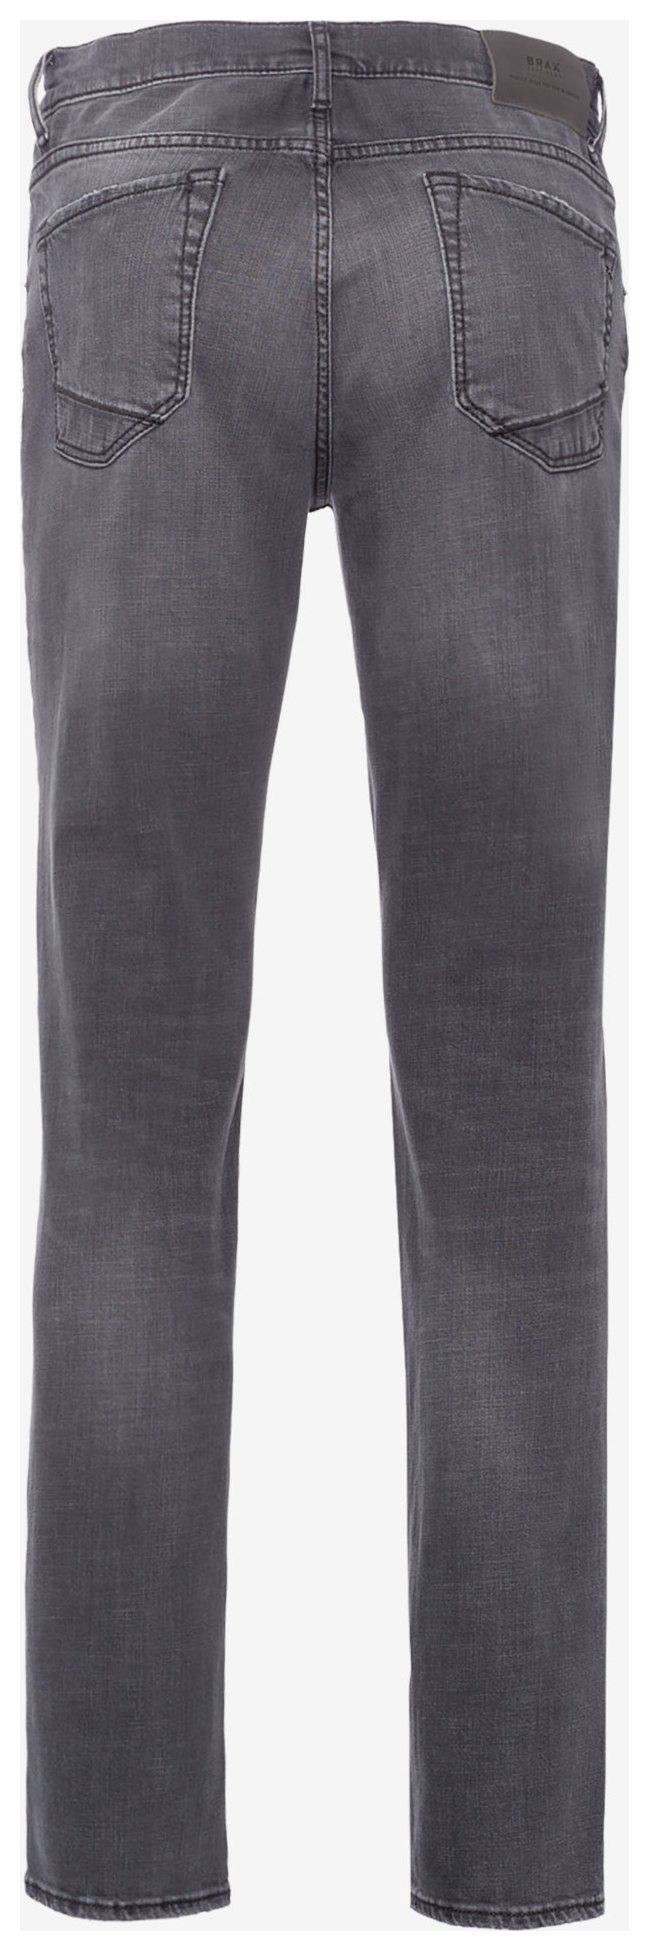 Brax Chuck Jeans Grigio Vintage | Jan Rozing Men\'s Fashion